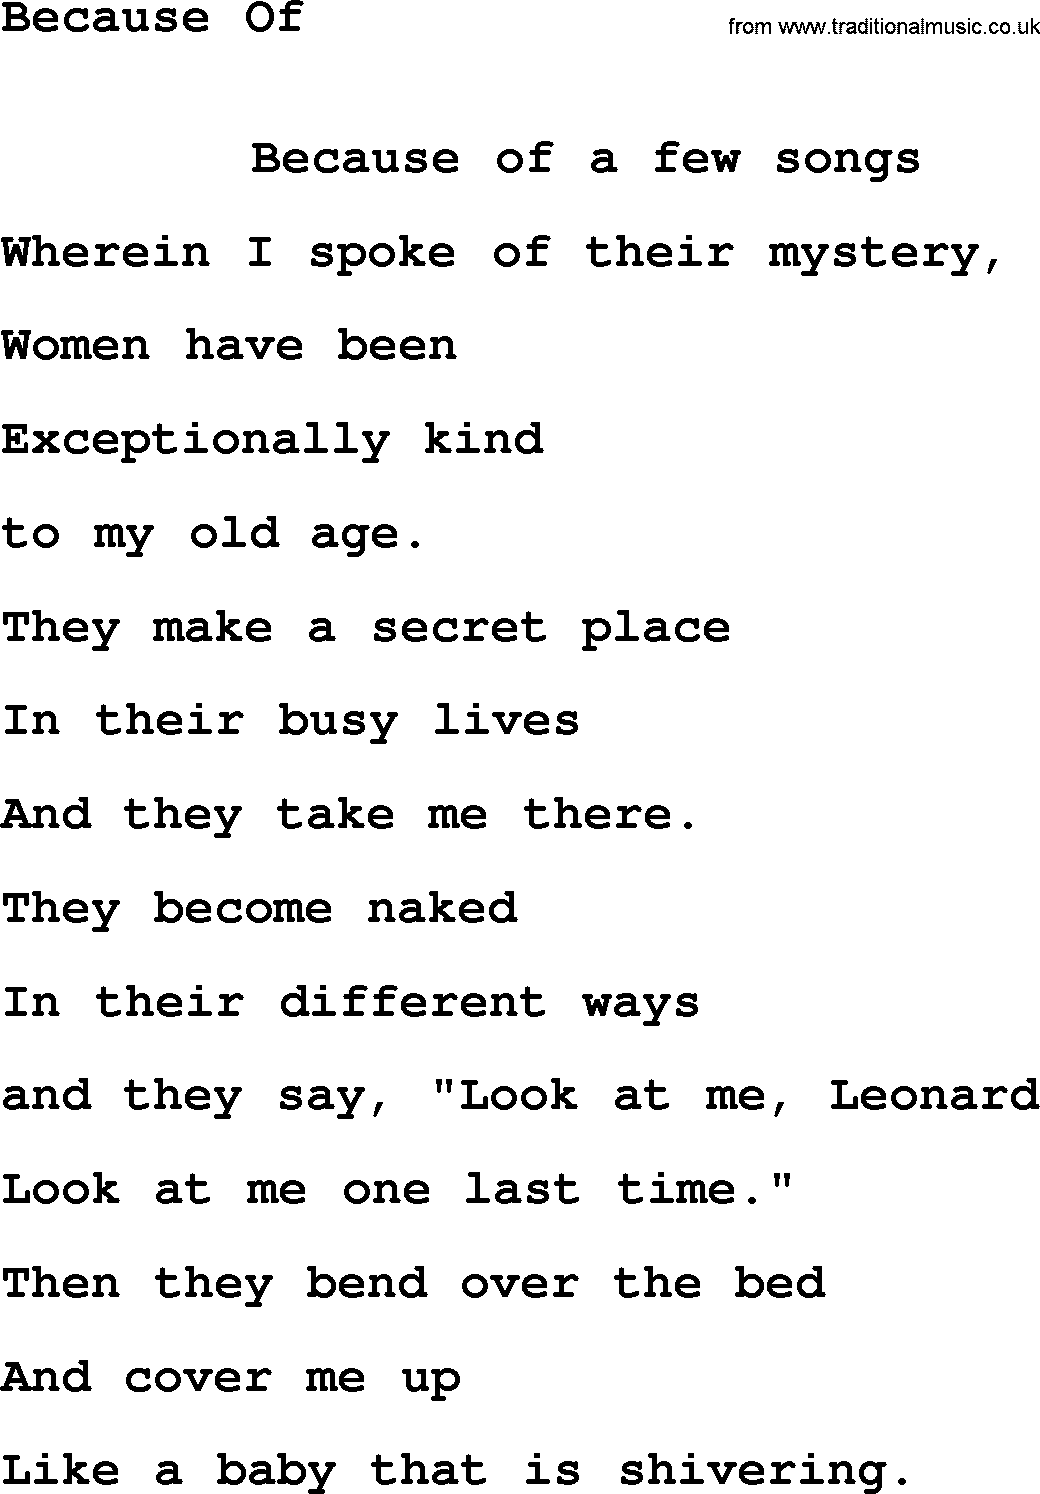 Leonard Cohen song Because-leonard-cohen.txt lyrics